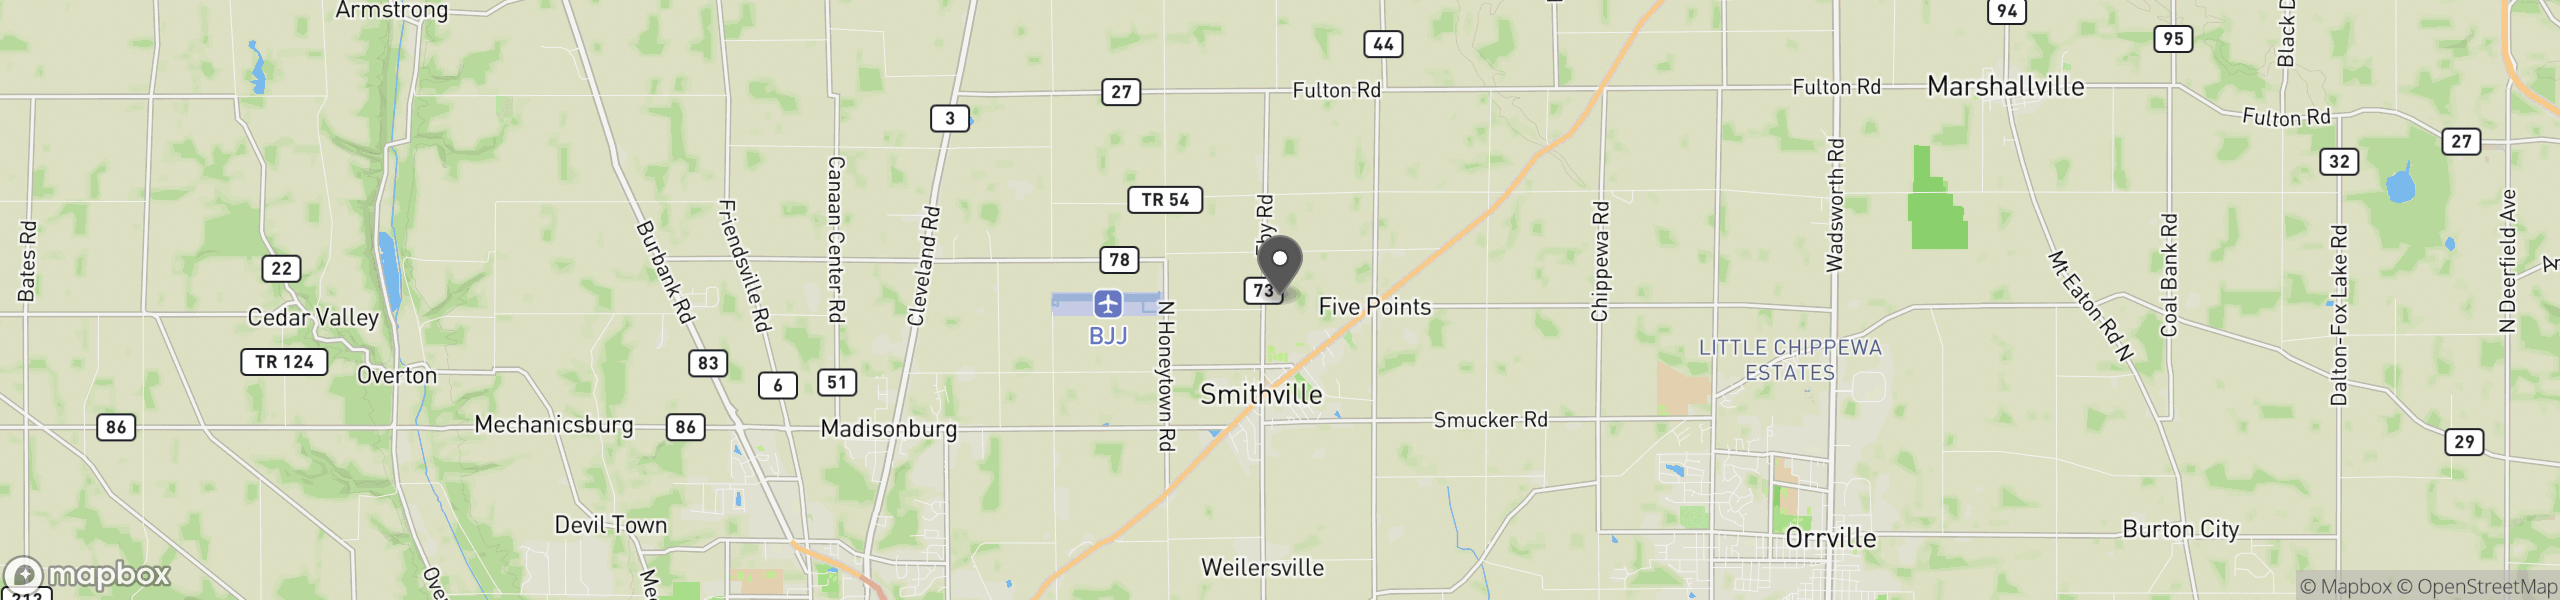 Smithville, OH 44677